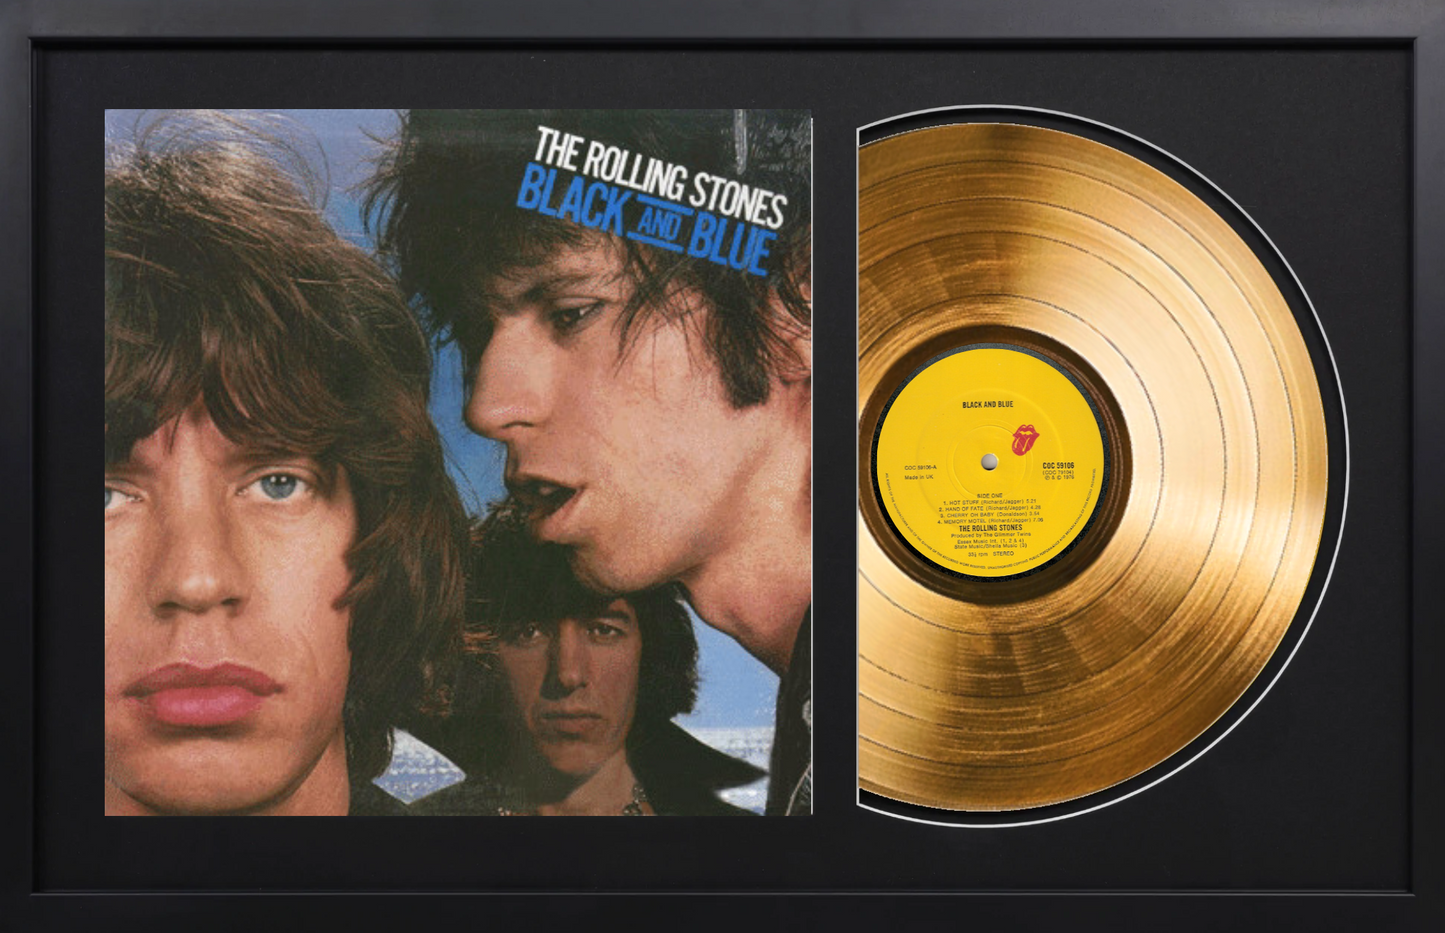 The Rolling Stones - Black and Blue - 14K Gold Framed Album